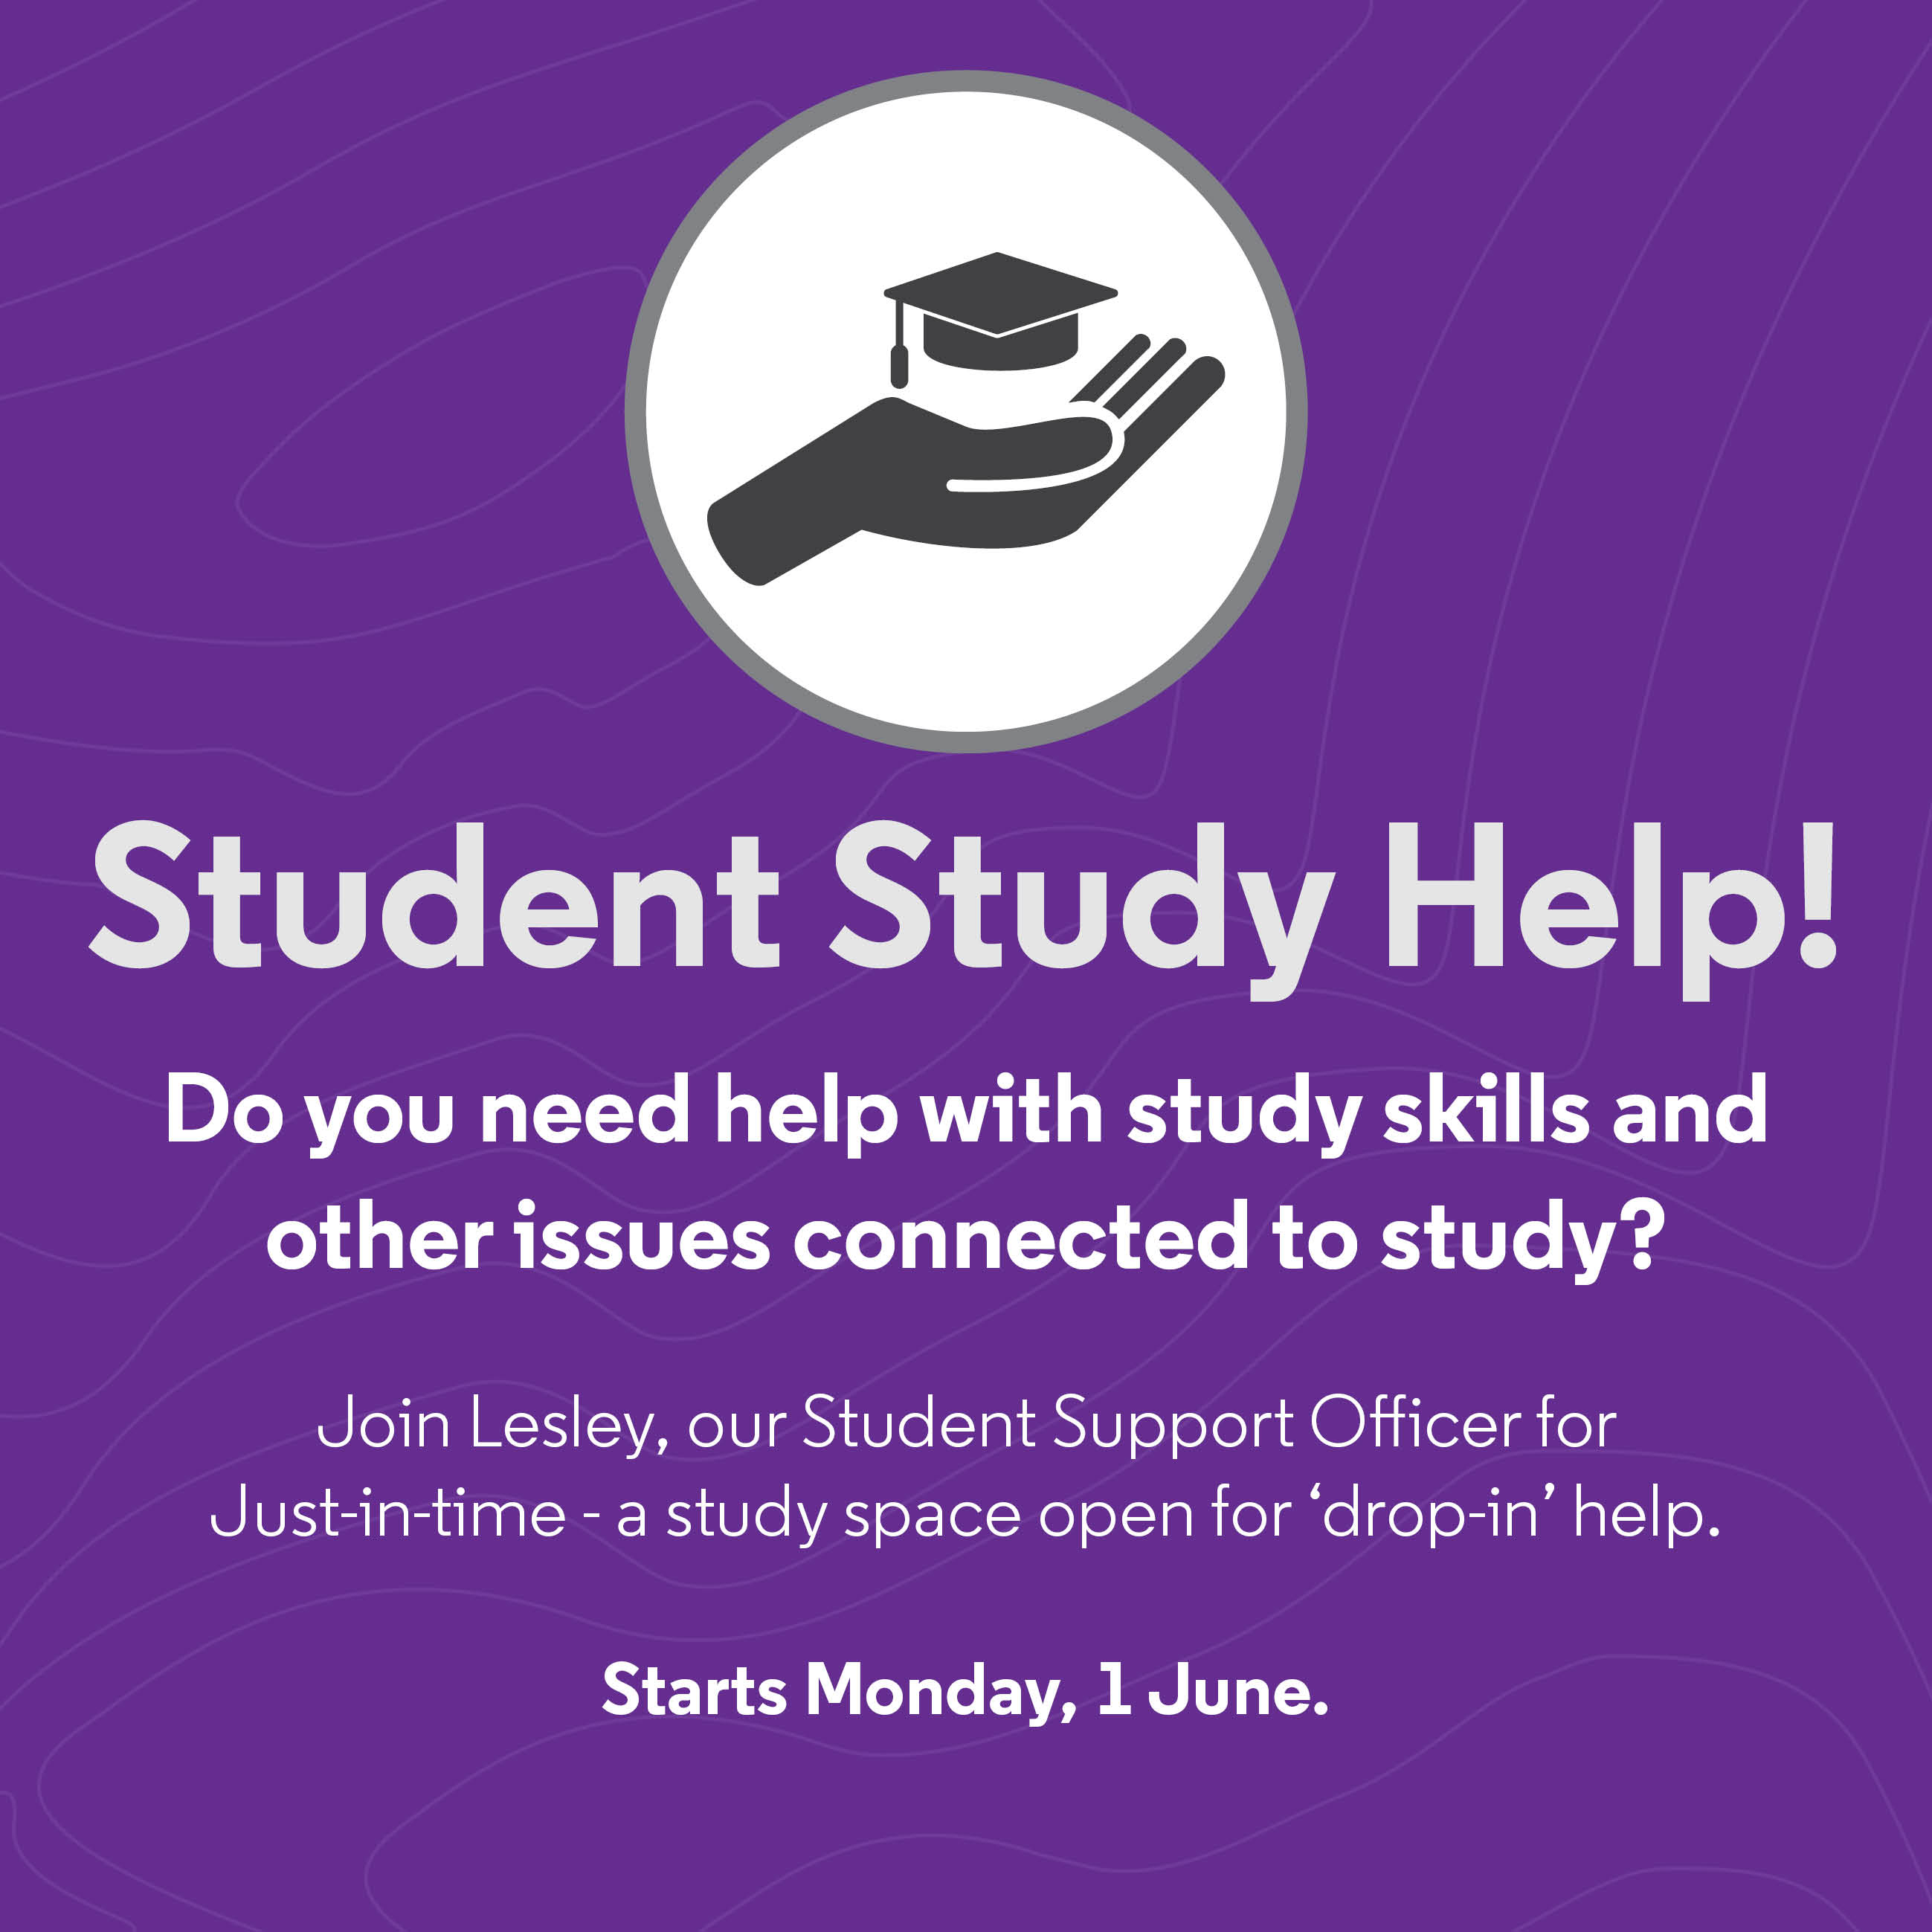 Student Study Help